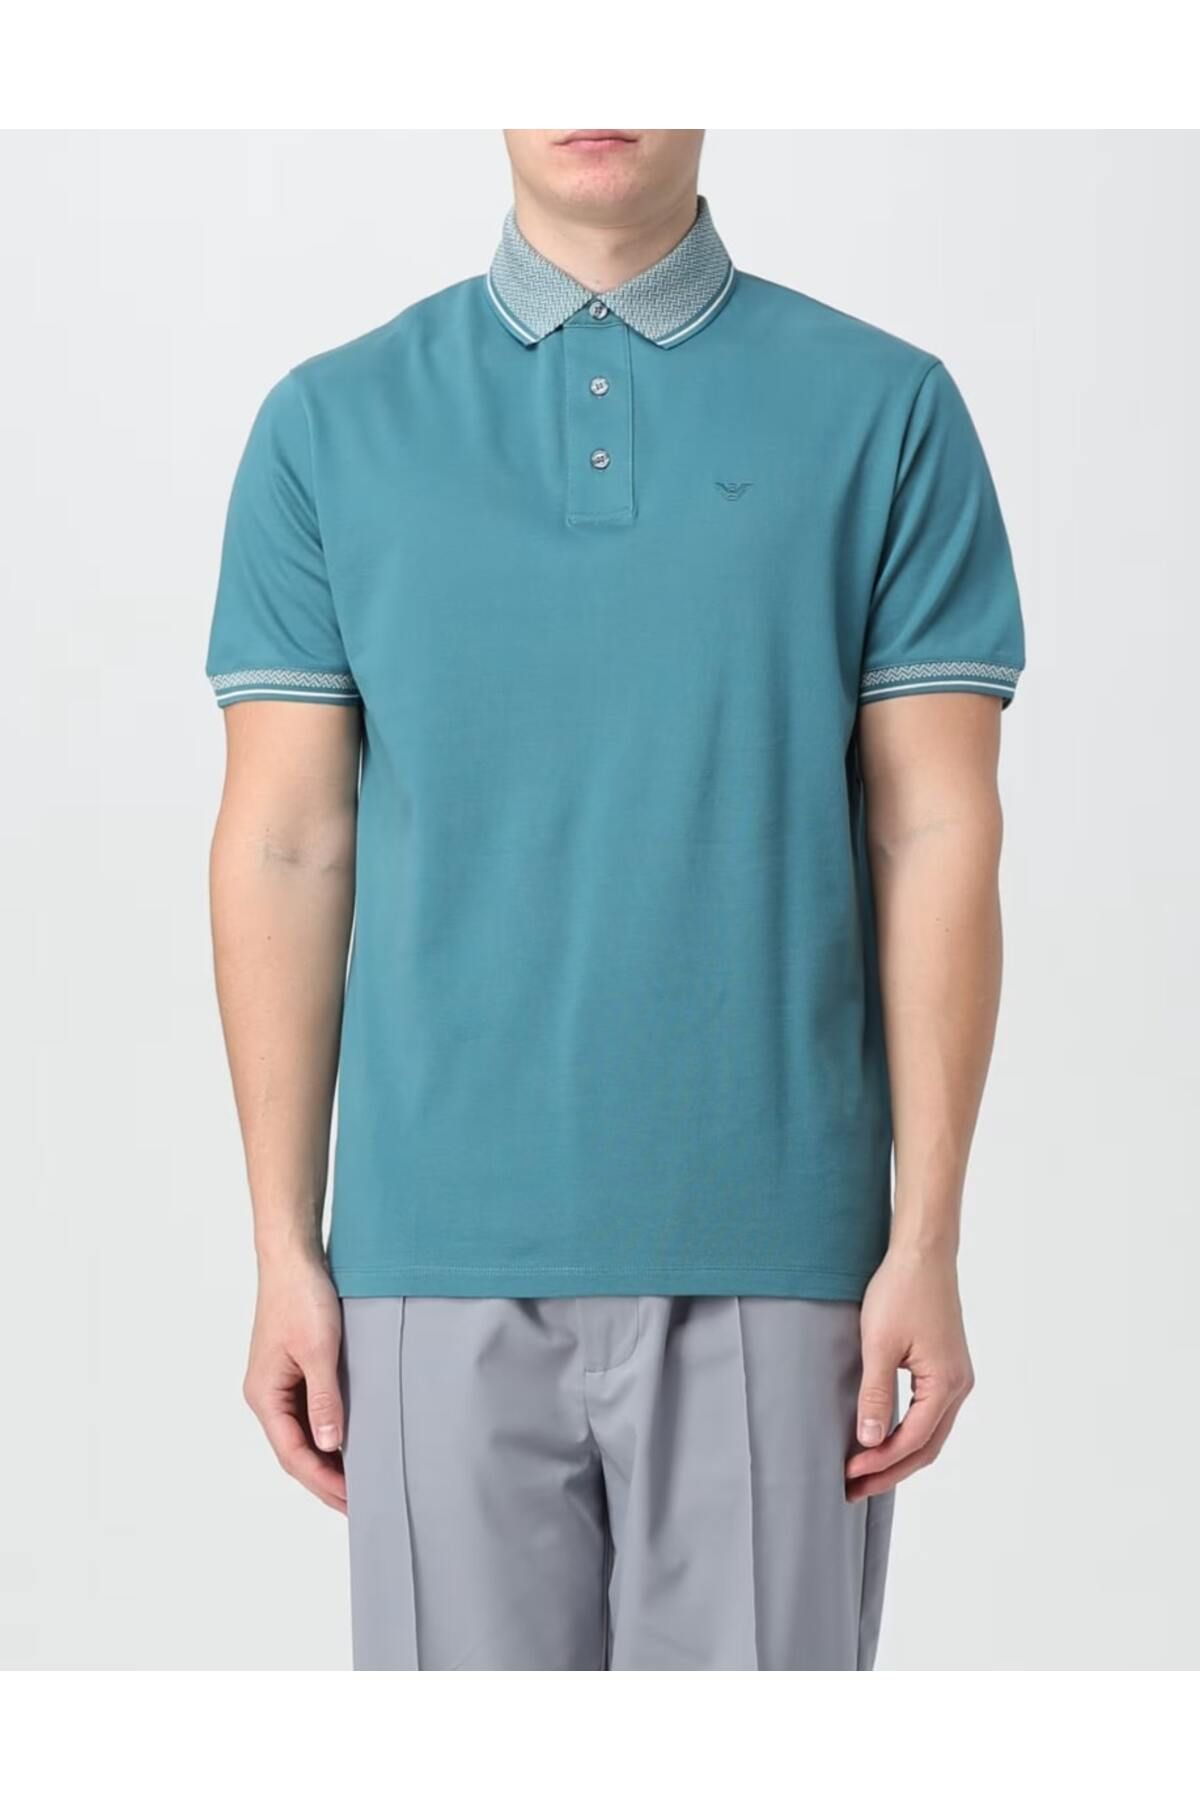 Emporio Armani Erkek Basic Kısa Kollu Logolu Açık Mavi Polo Yaka T-Shirt 3D1FM5 1JTKZ-07A6